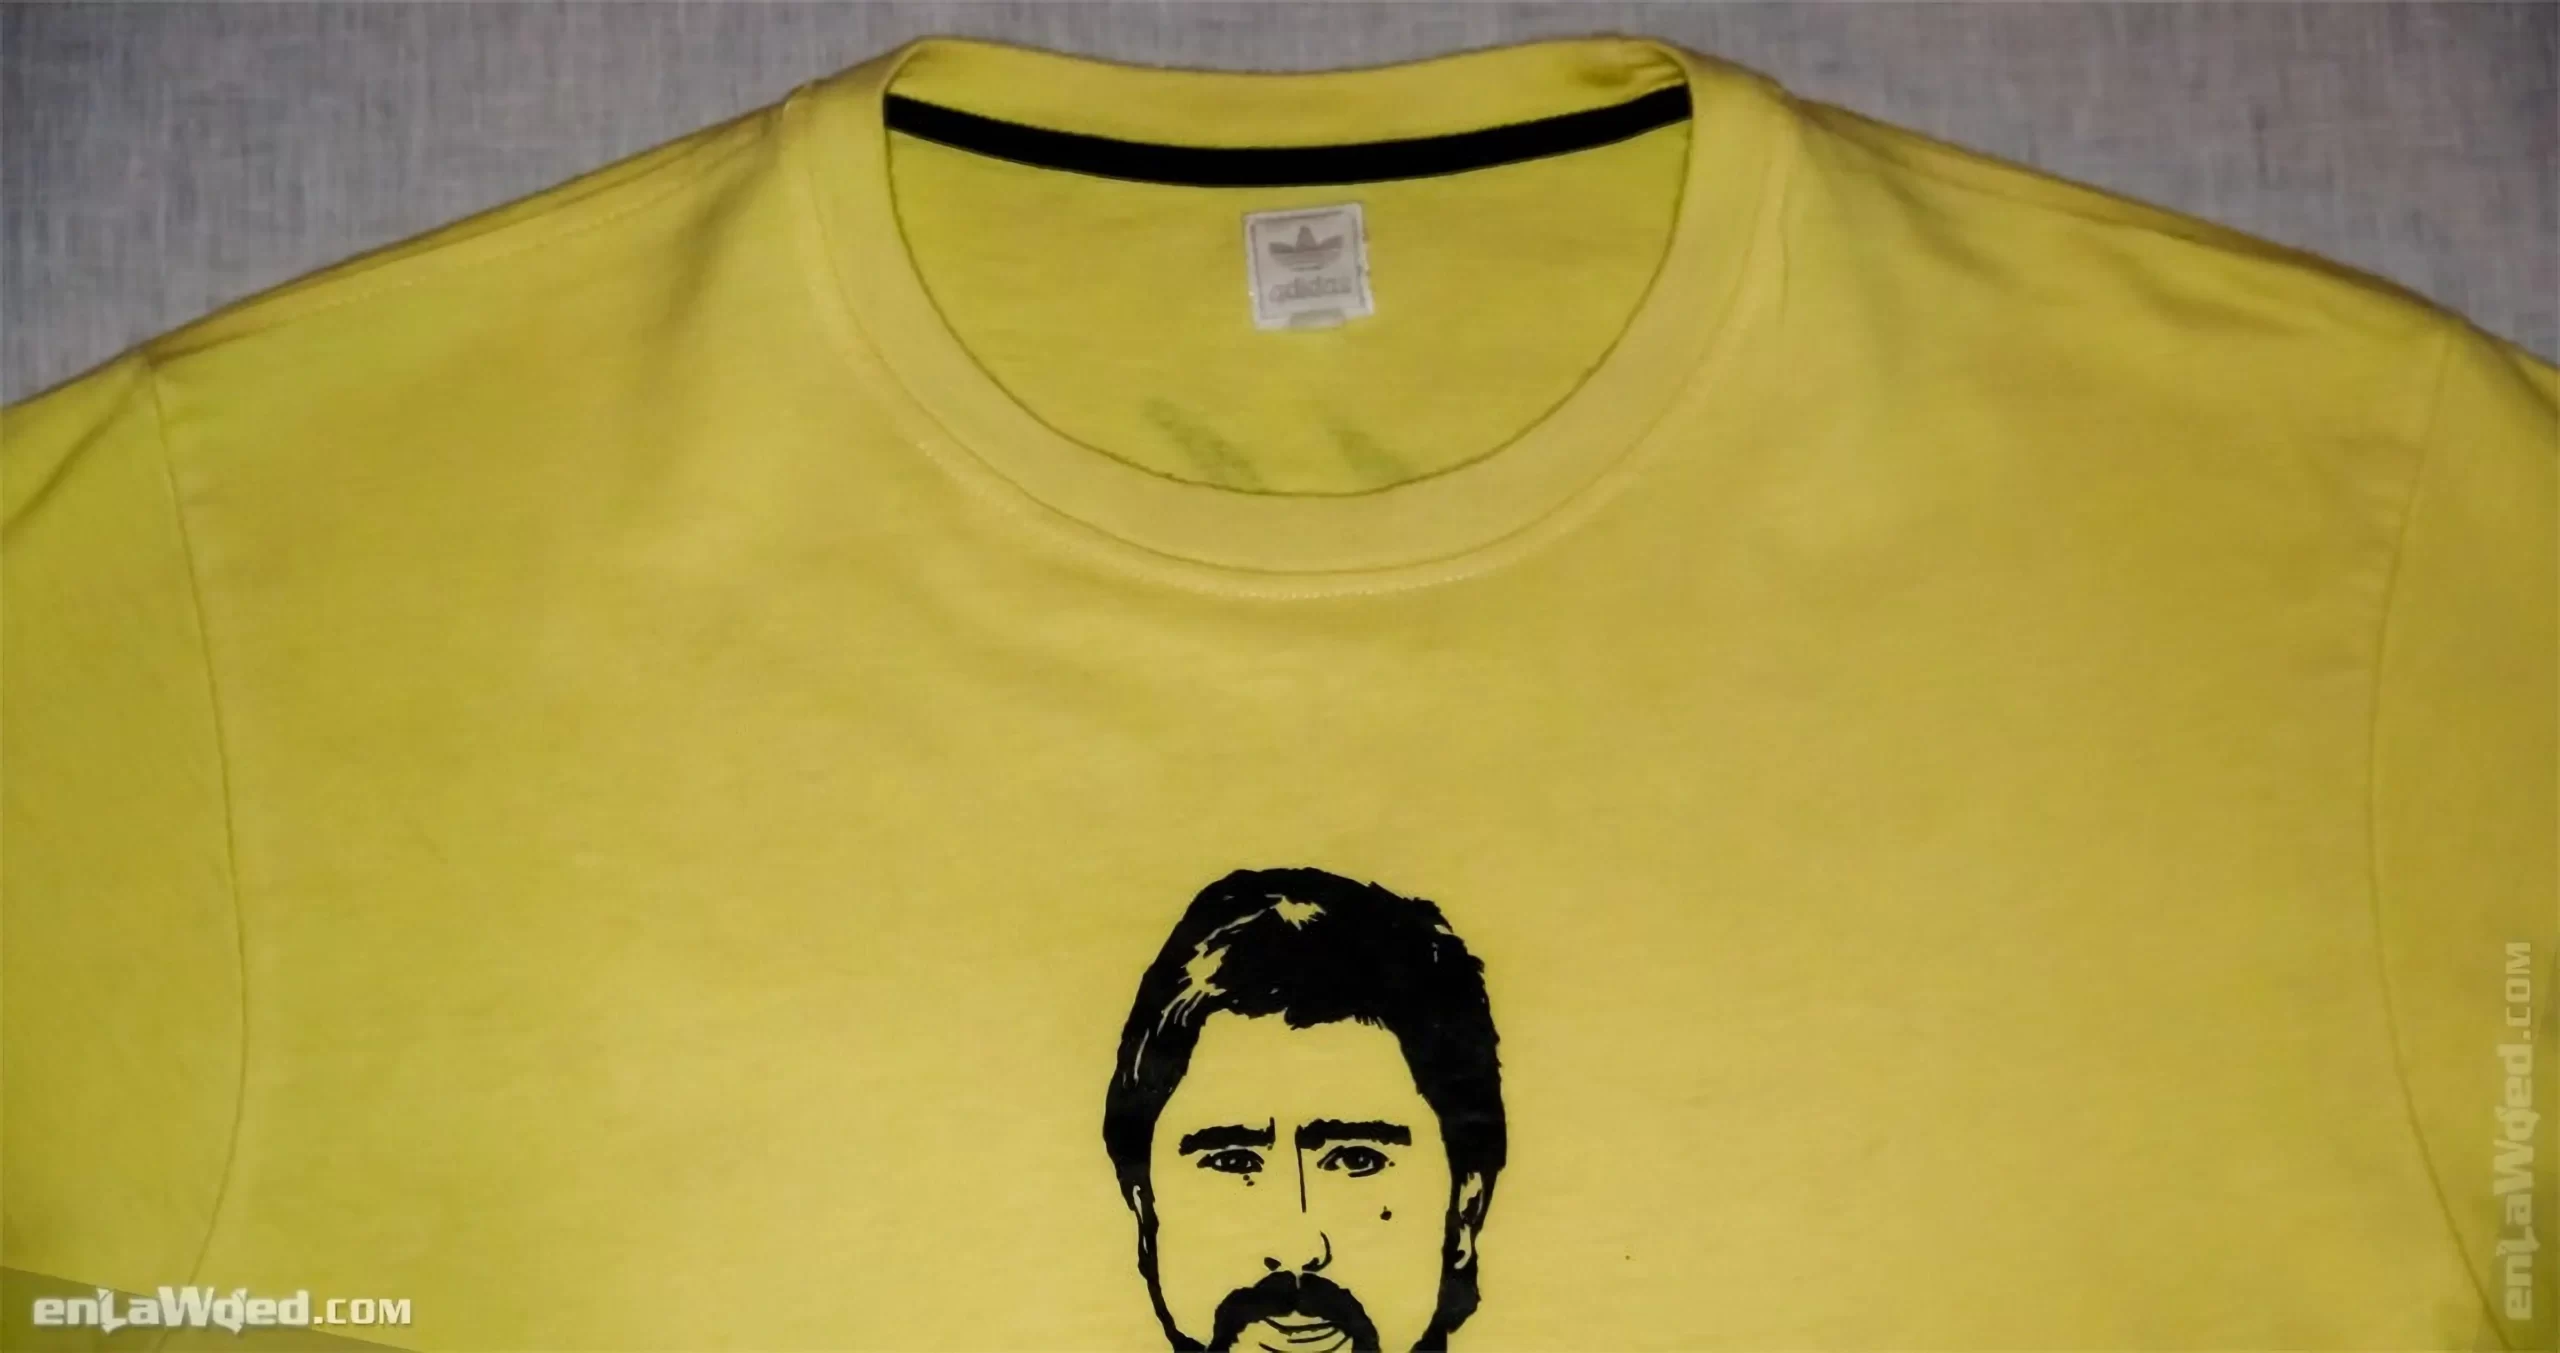 Men’s 2006 Gerd Müller Player’s Club T-Shirt by Adidas: Erfolgsbilanz (EnLawded.com file #lmchejndfeqz4eyb0nb)